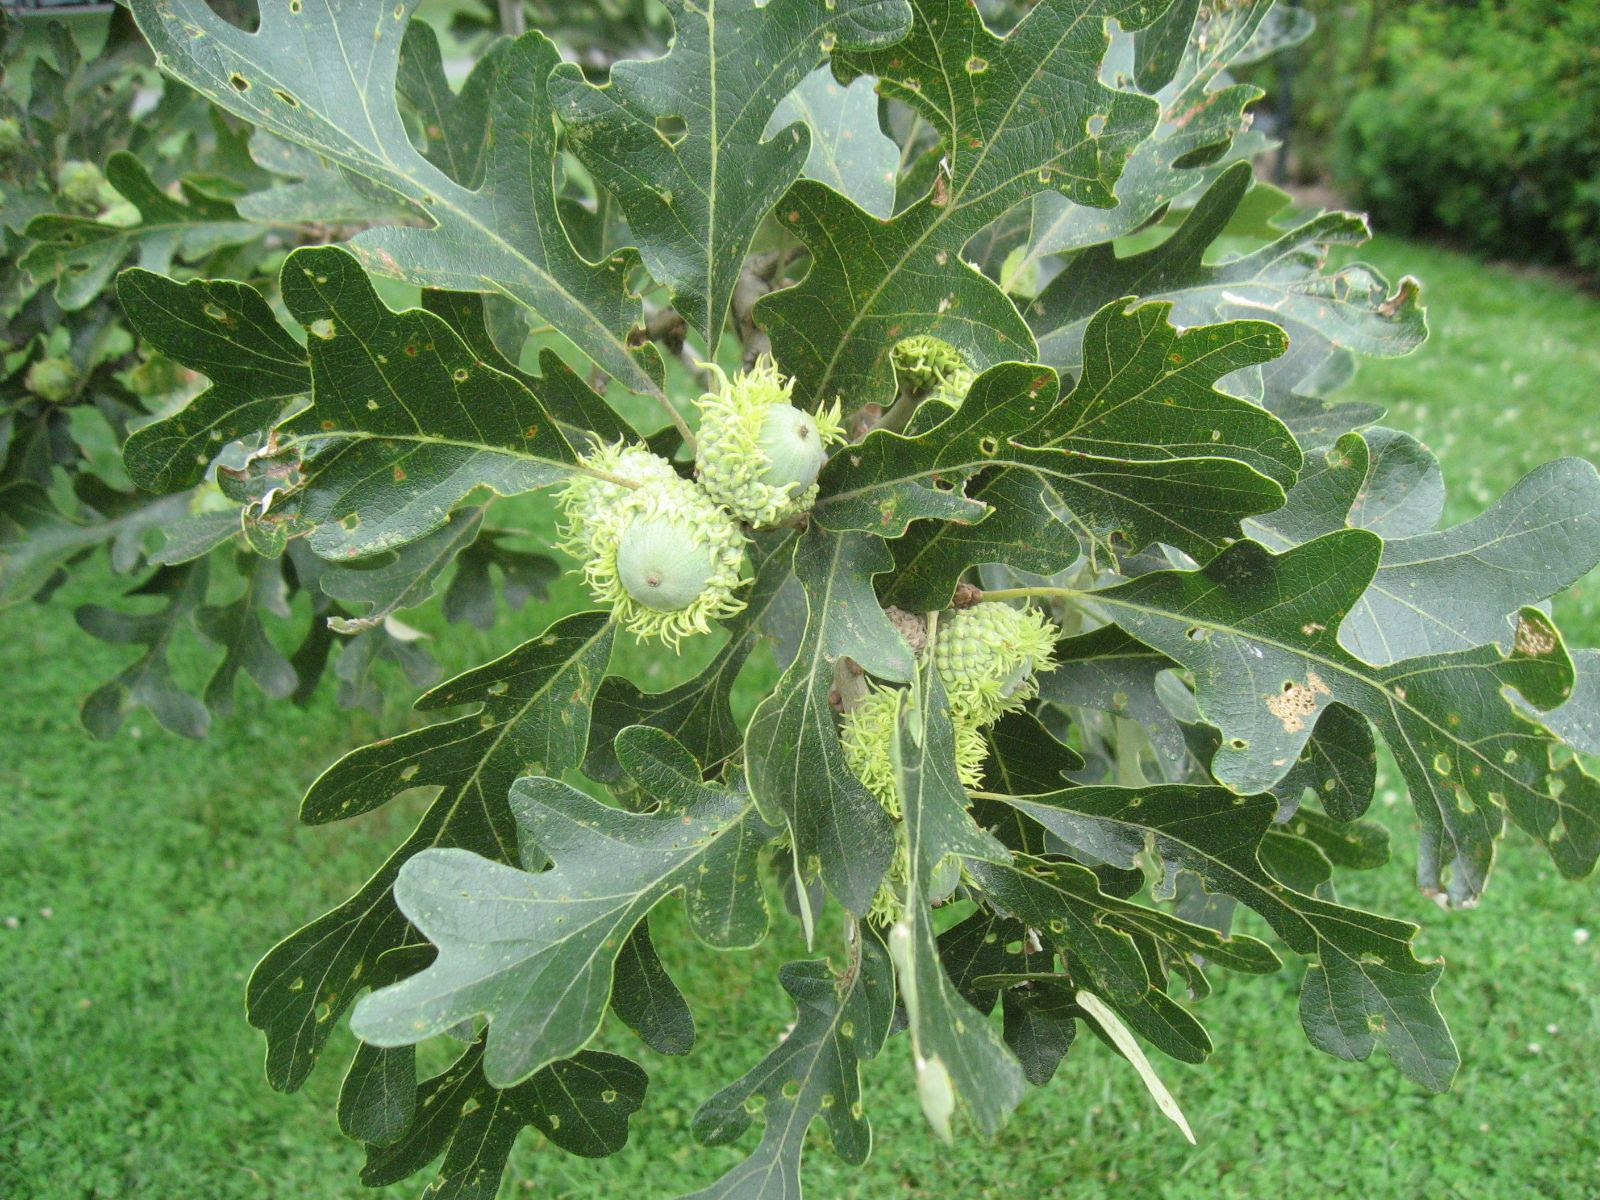 Detail of leaves and acorn of the bur oak.